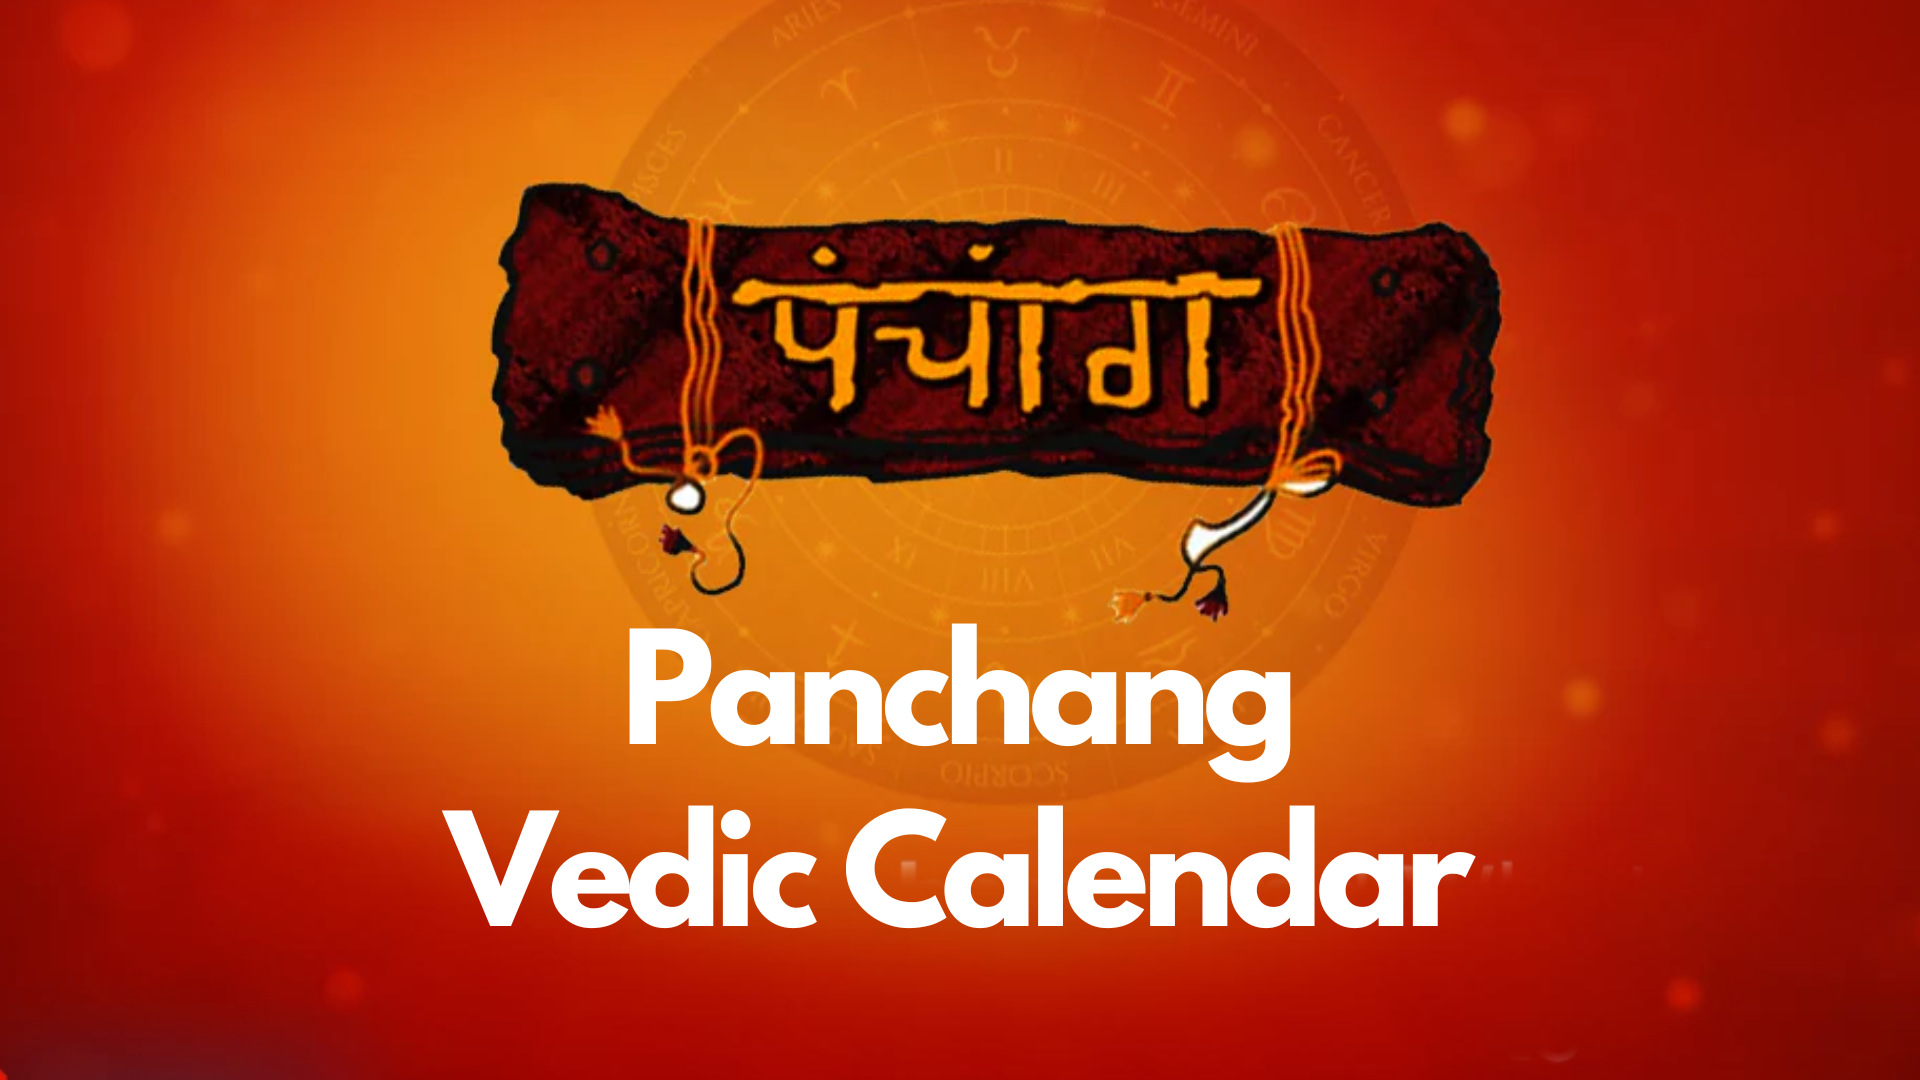 Panchang: Vedic Calendar